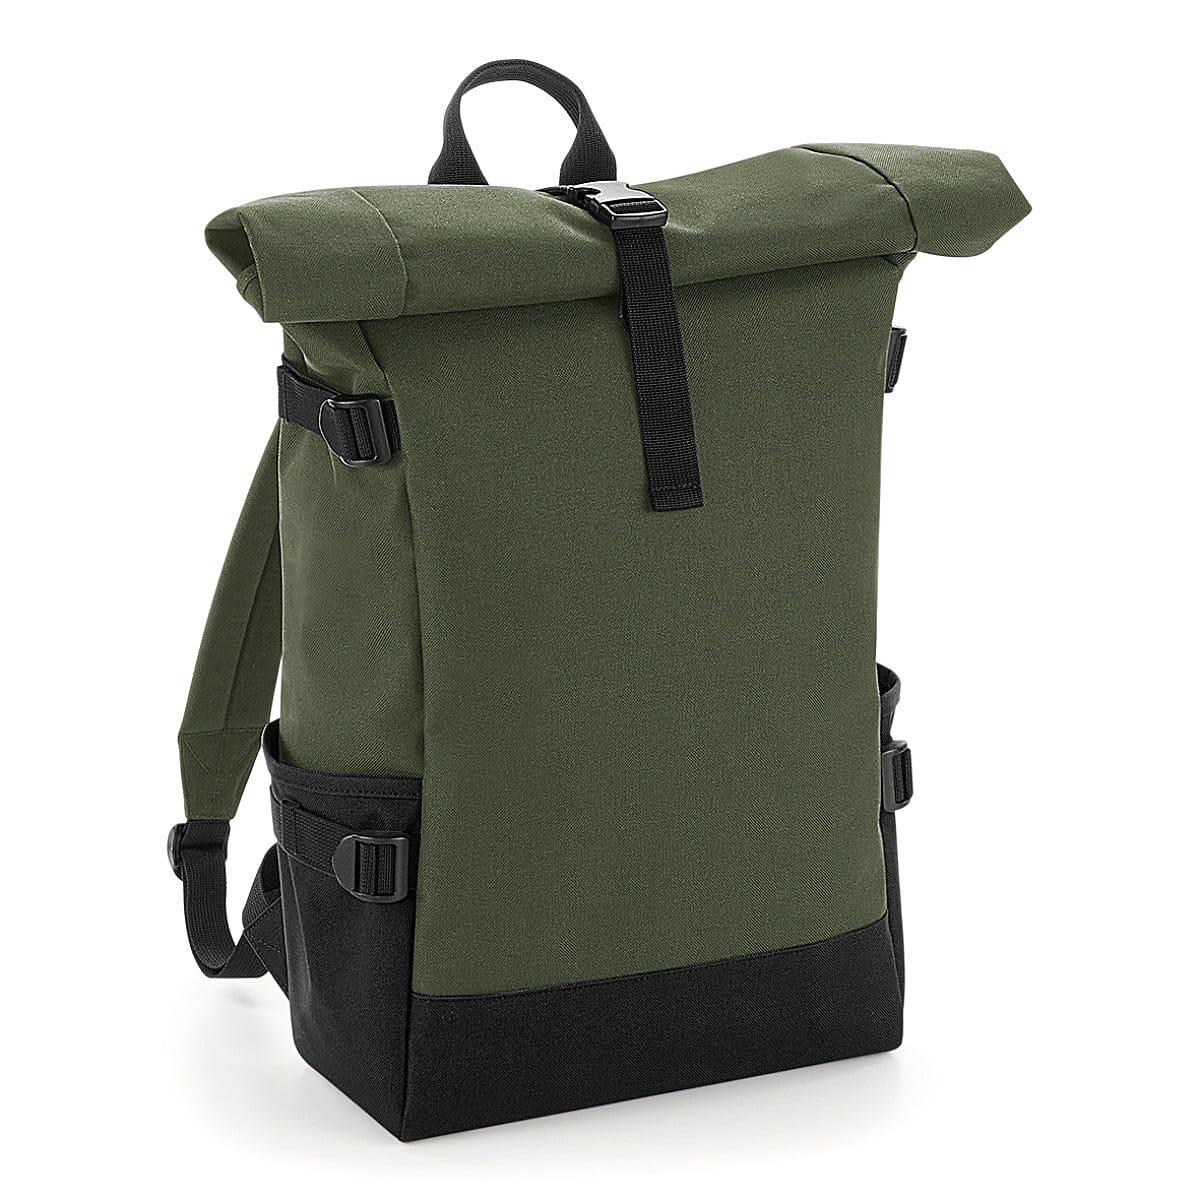 Bagbase Block Roll-Top Backpack in Olive / Black (Product Code: BG858)